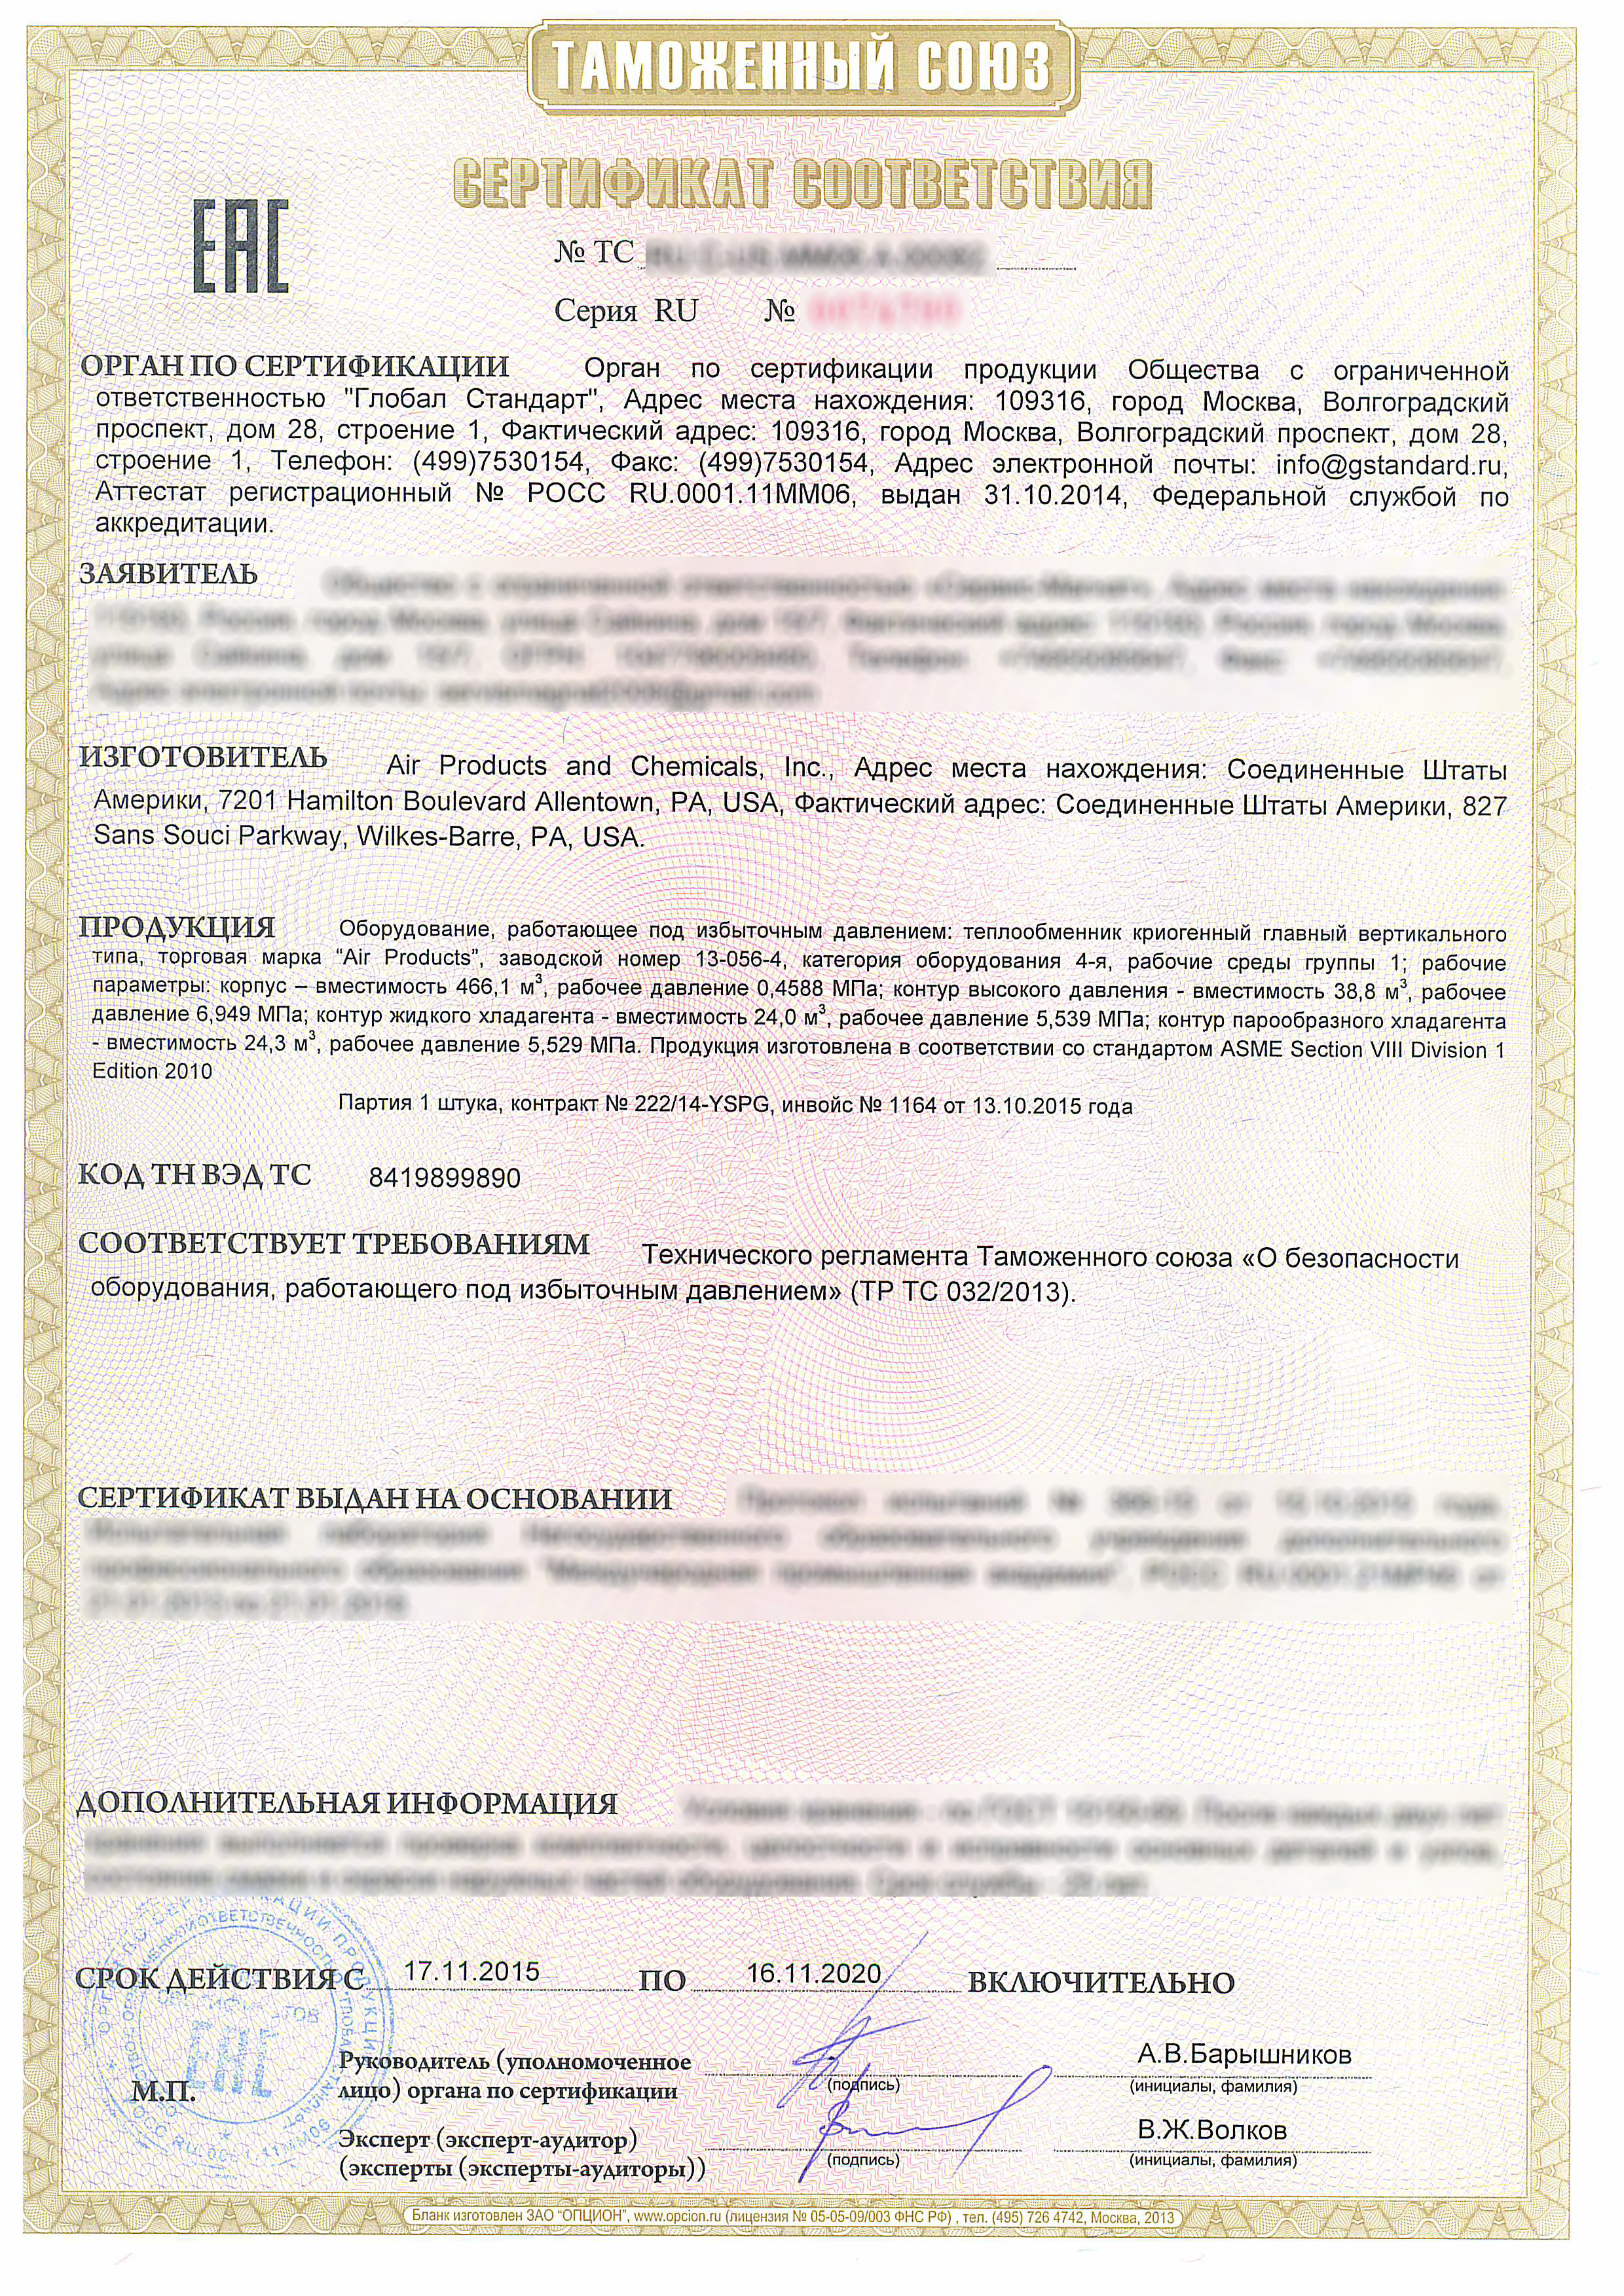 пример-сертификата-тр-тс-032-2013